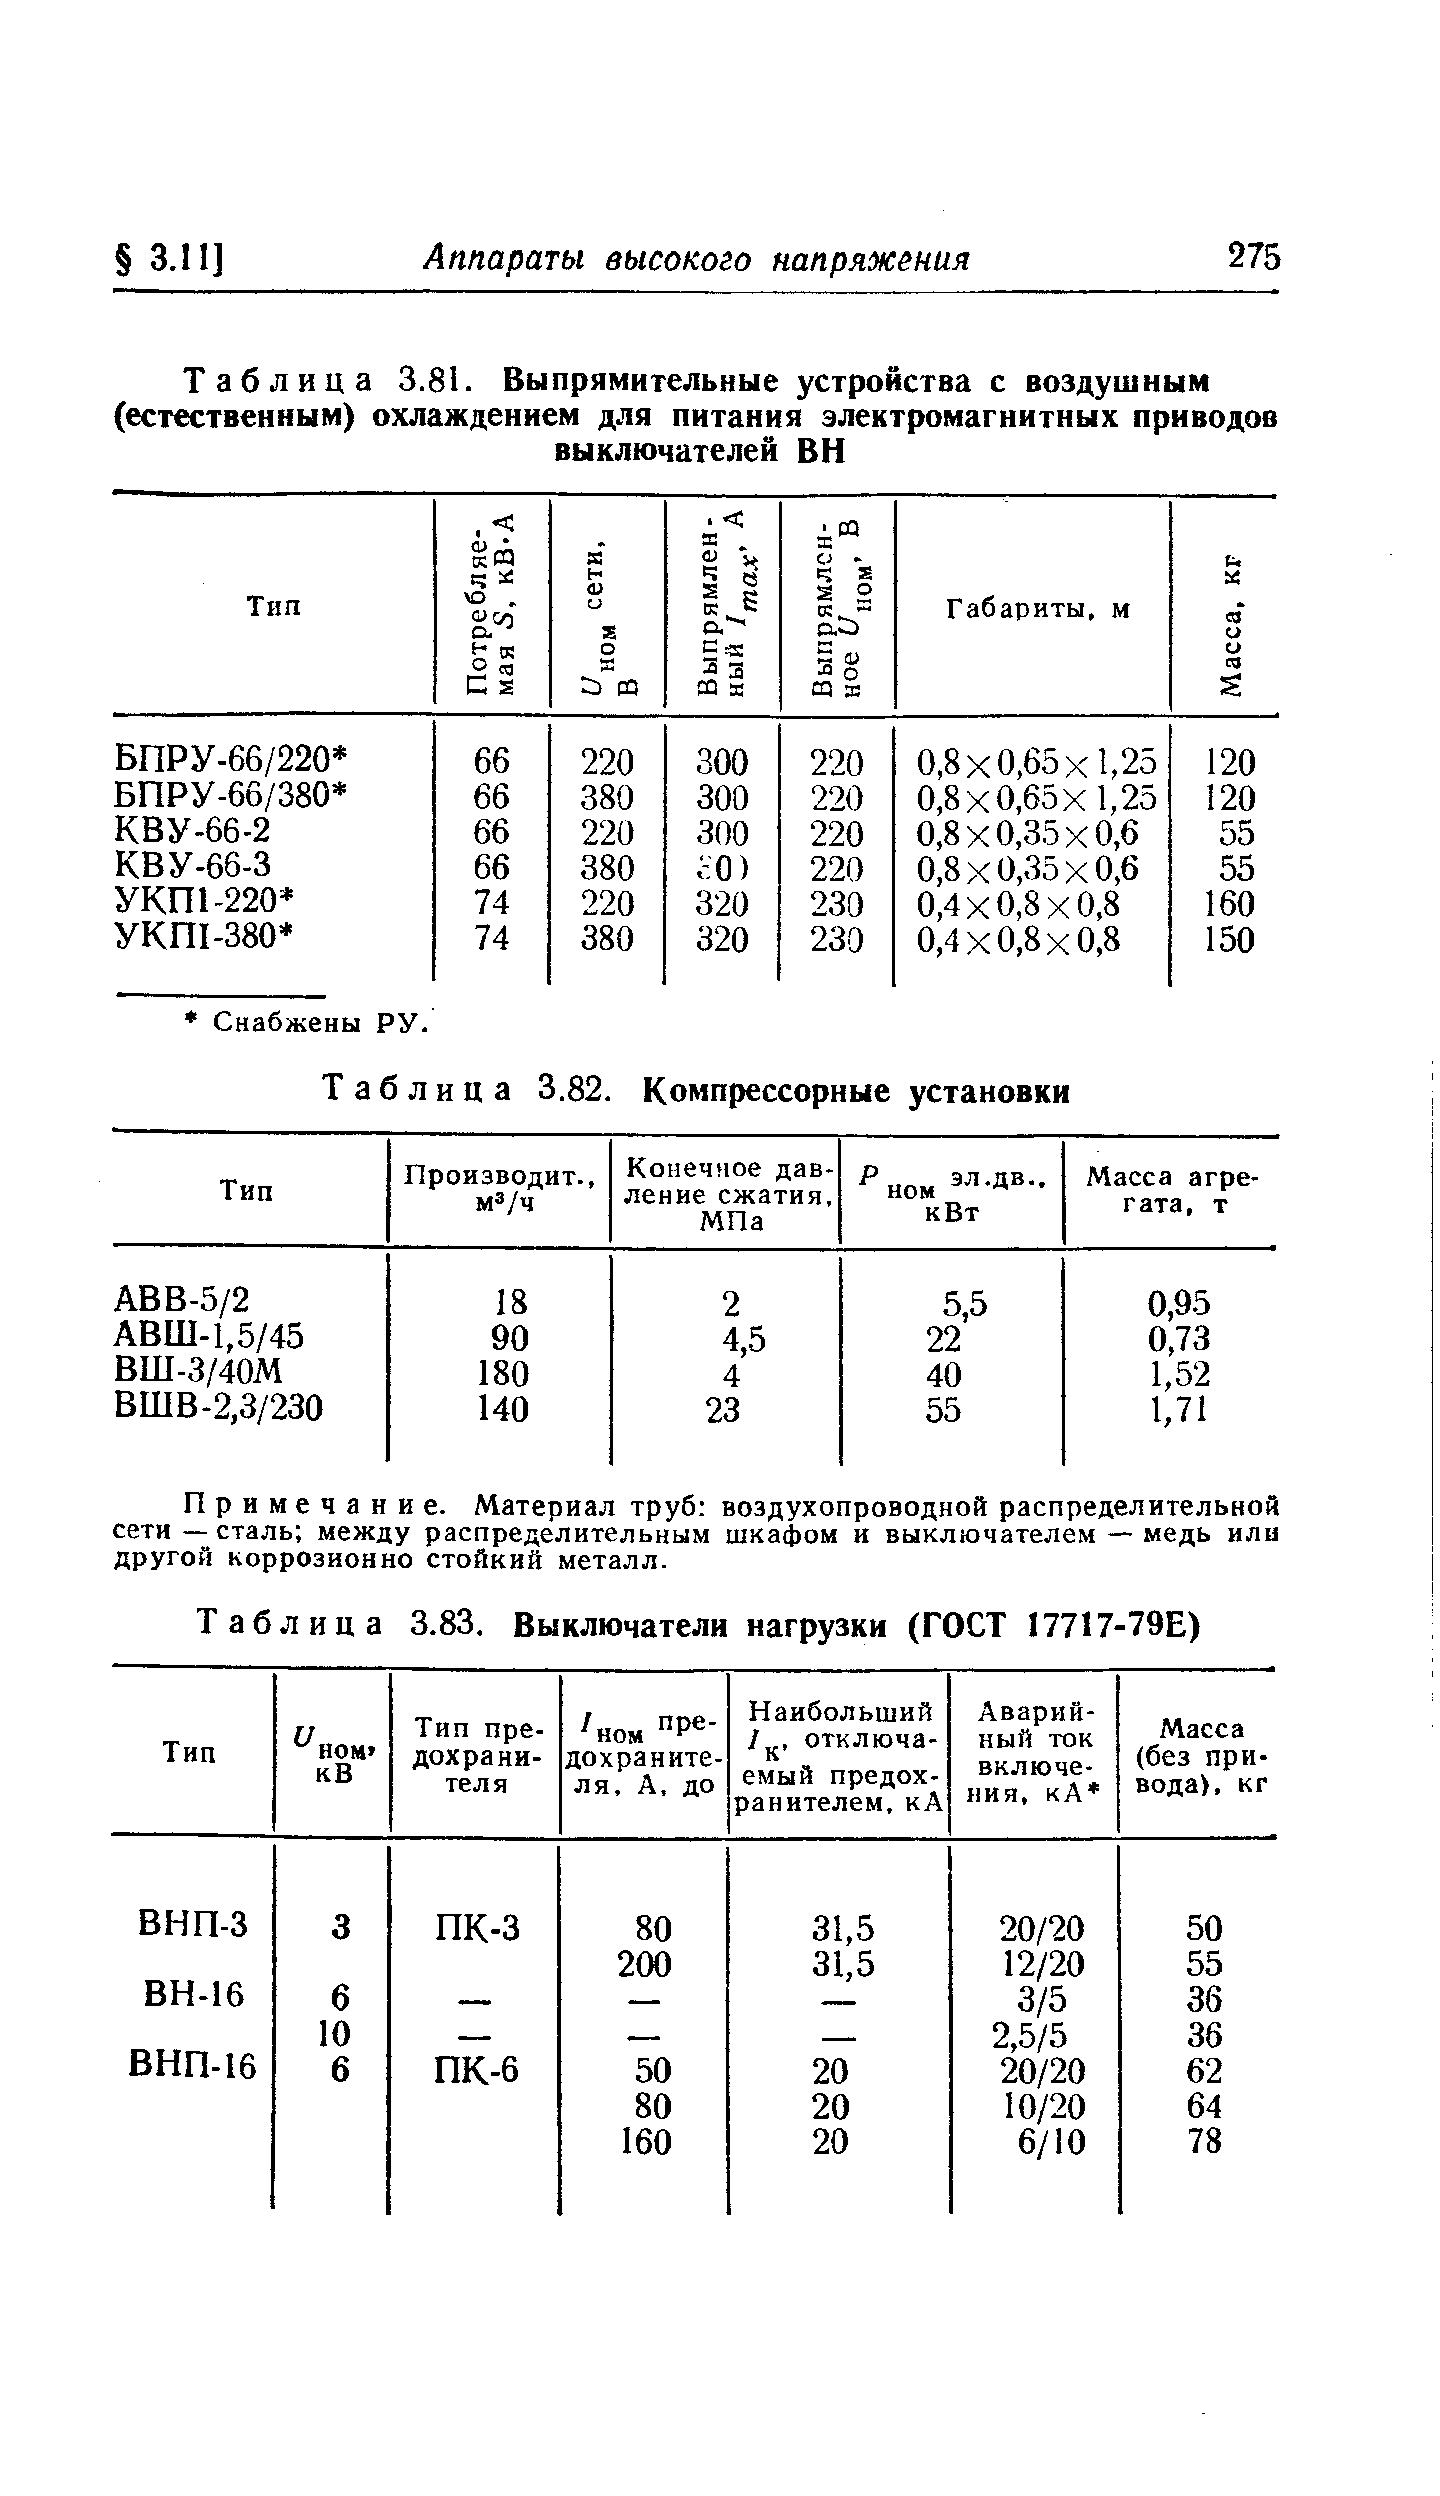 Таблица 3.83. Выключатели нагрузки (ГОСТ 17717-79Е)
